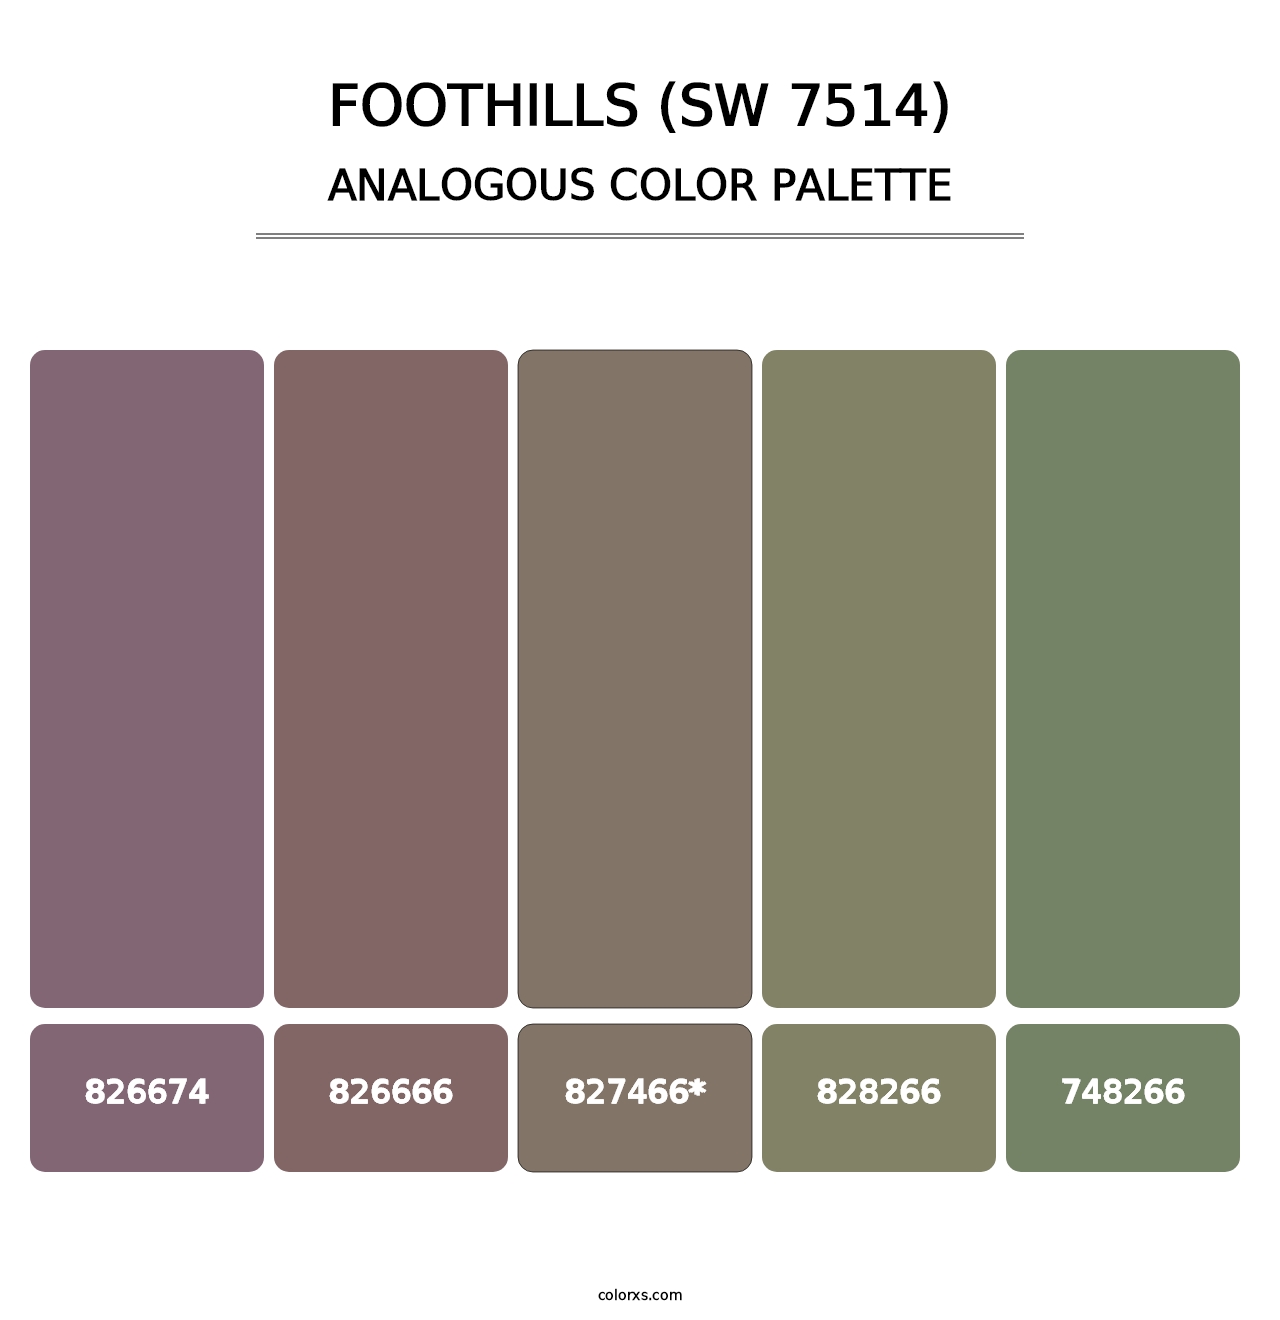 Foothills (SW 7514) - Analogous Color Palette